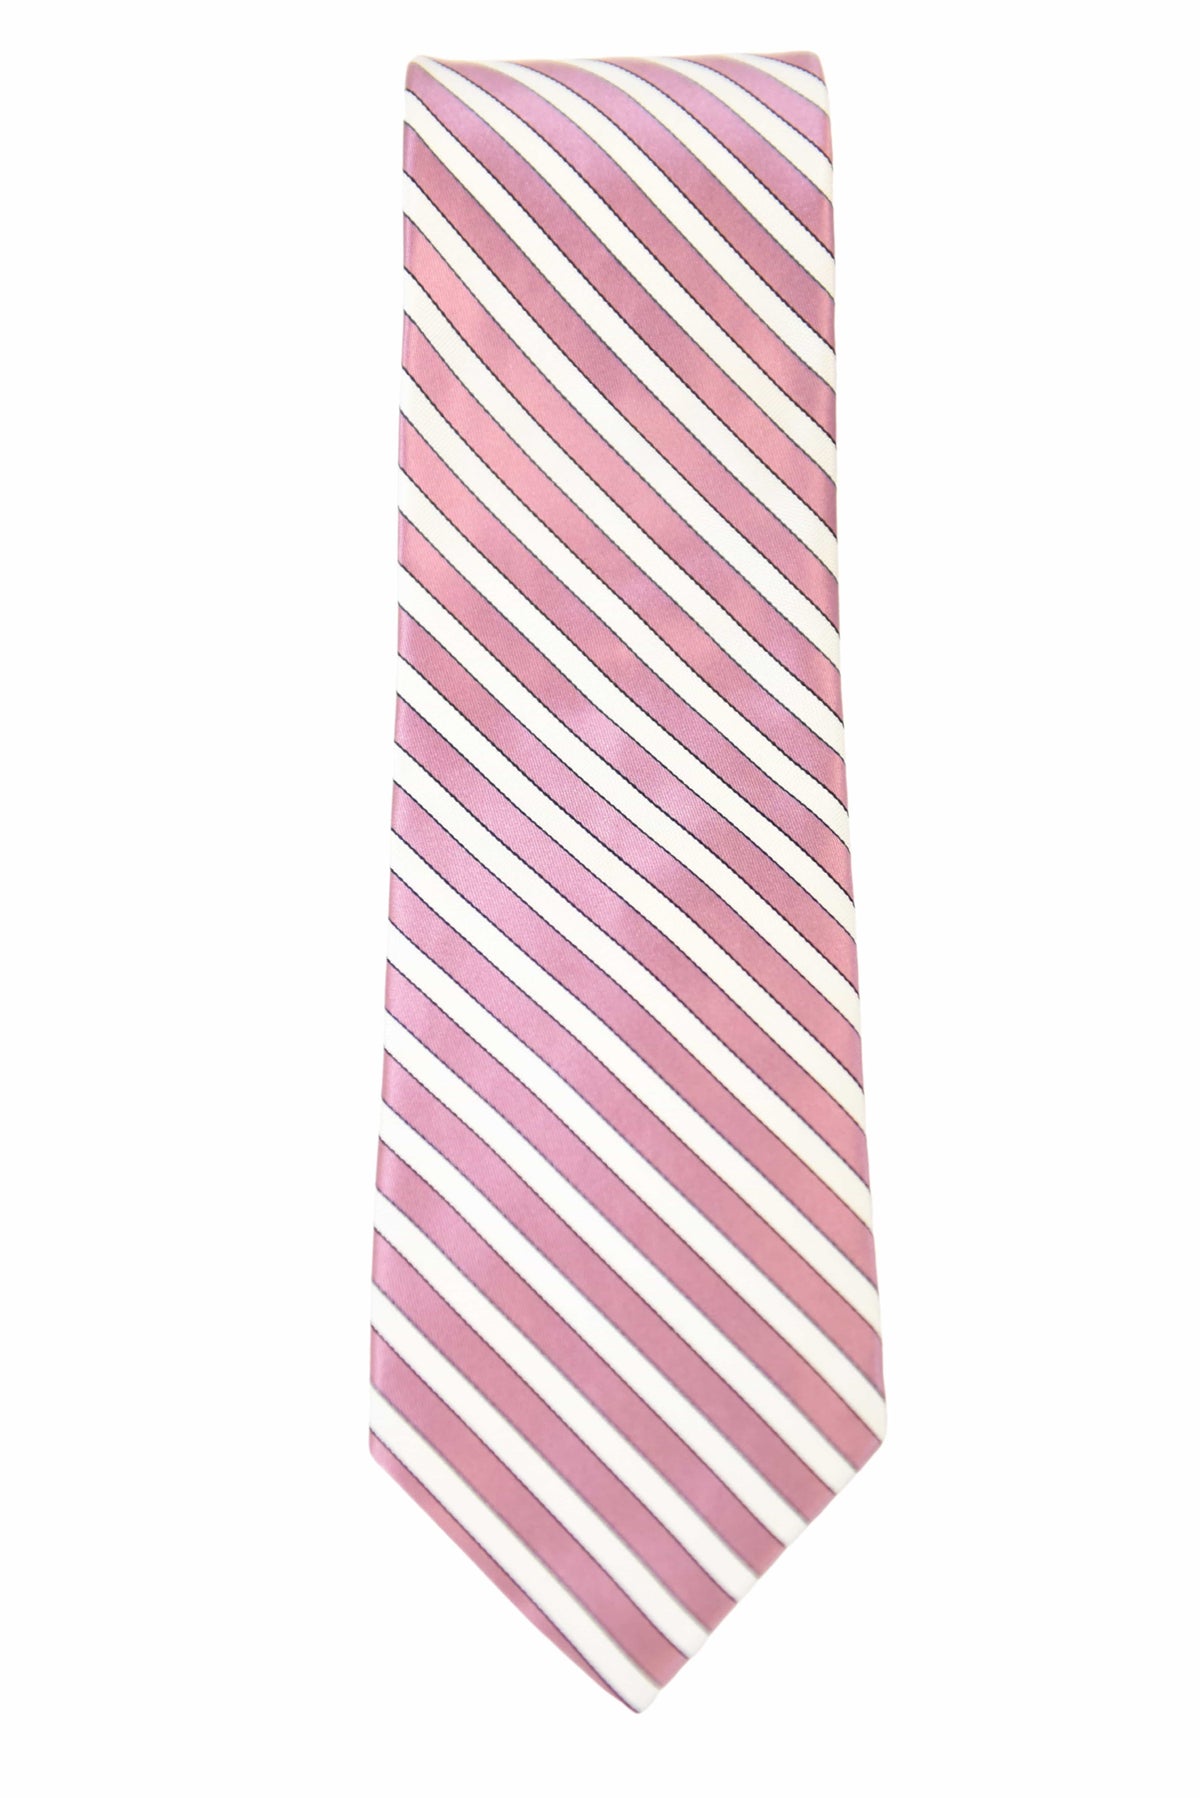 The Suit Depot Pink Stripe Arthur Black Premium Silk Tie